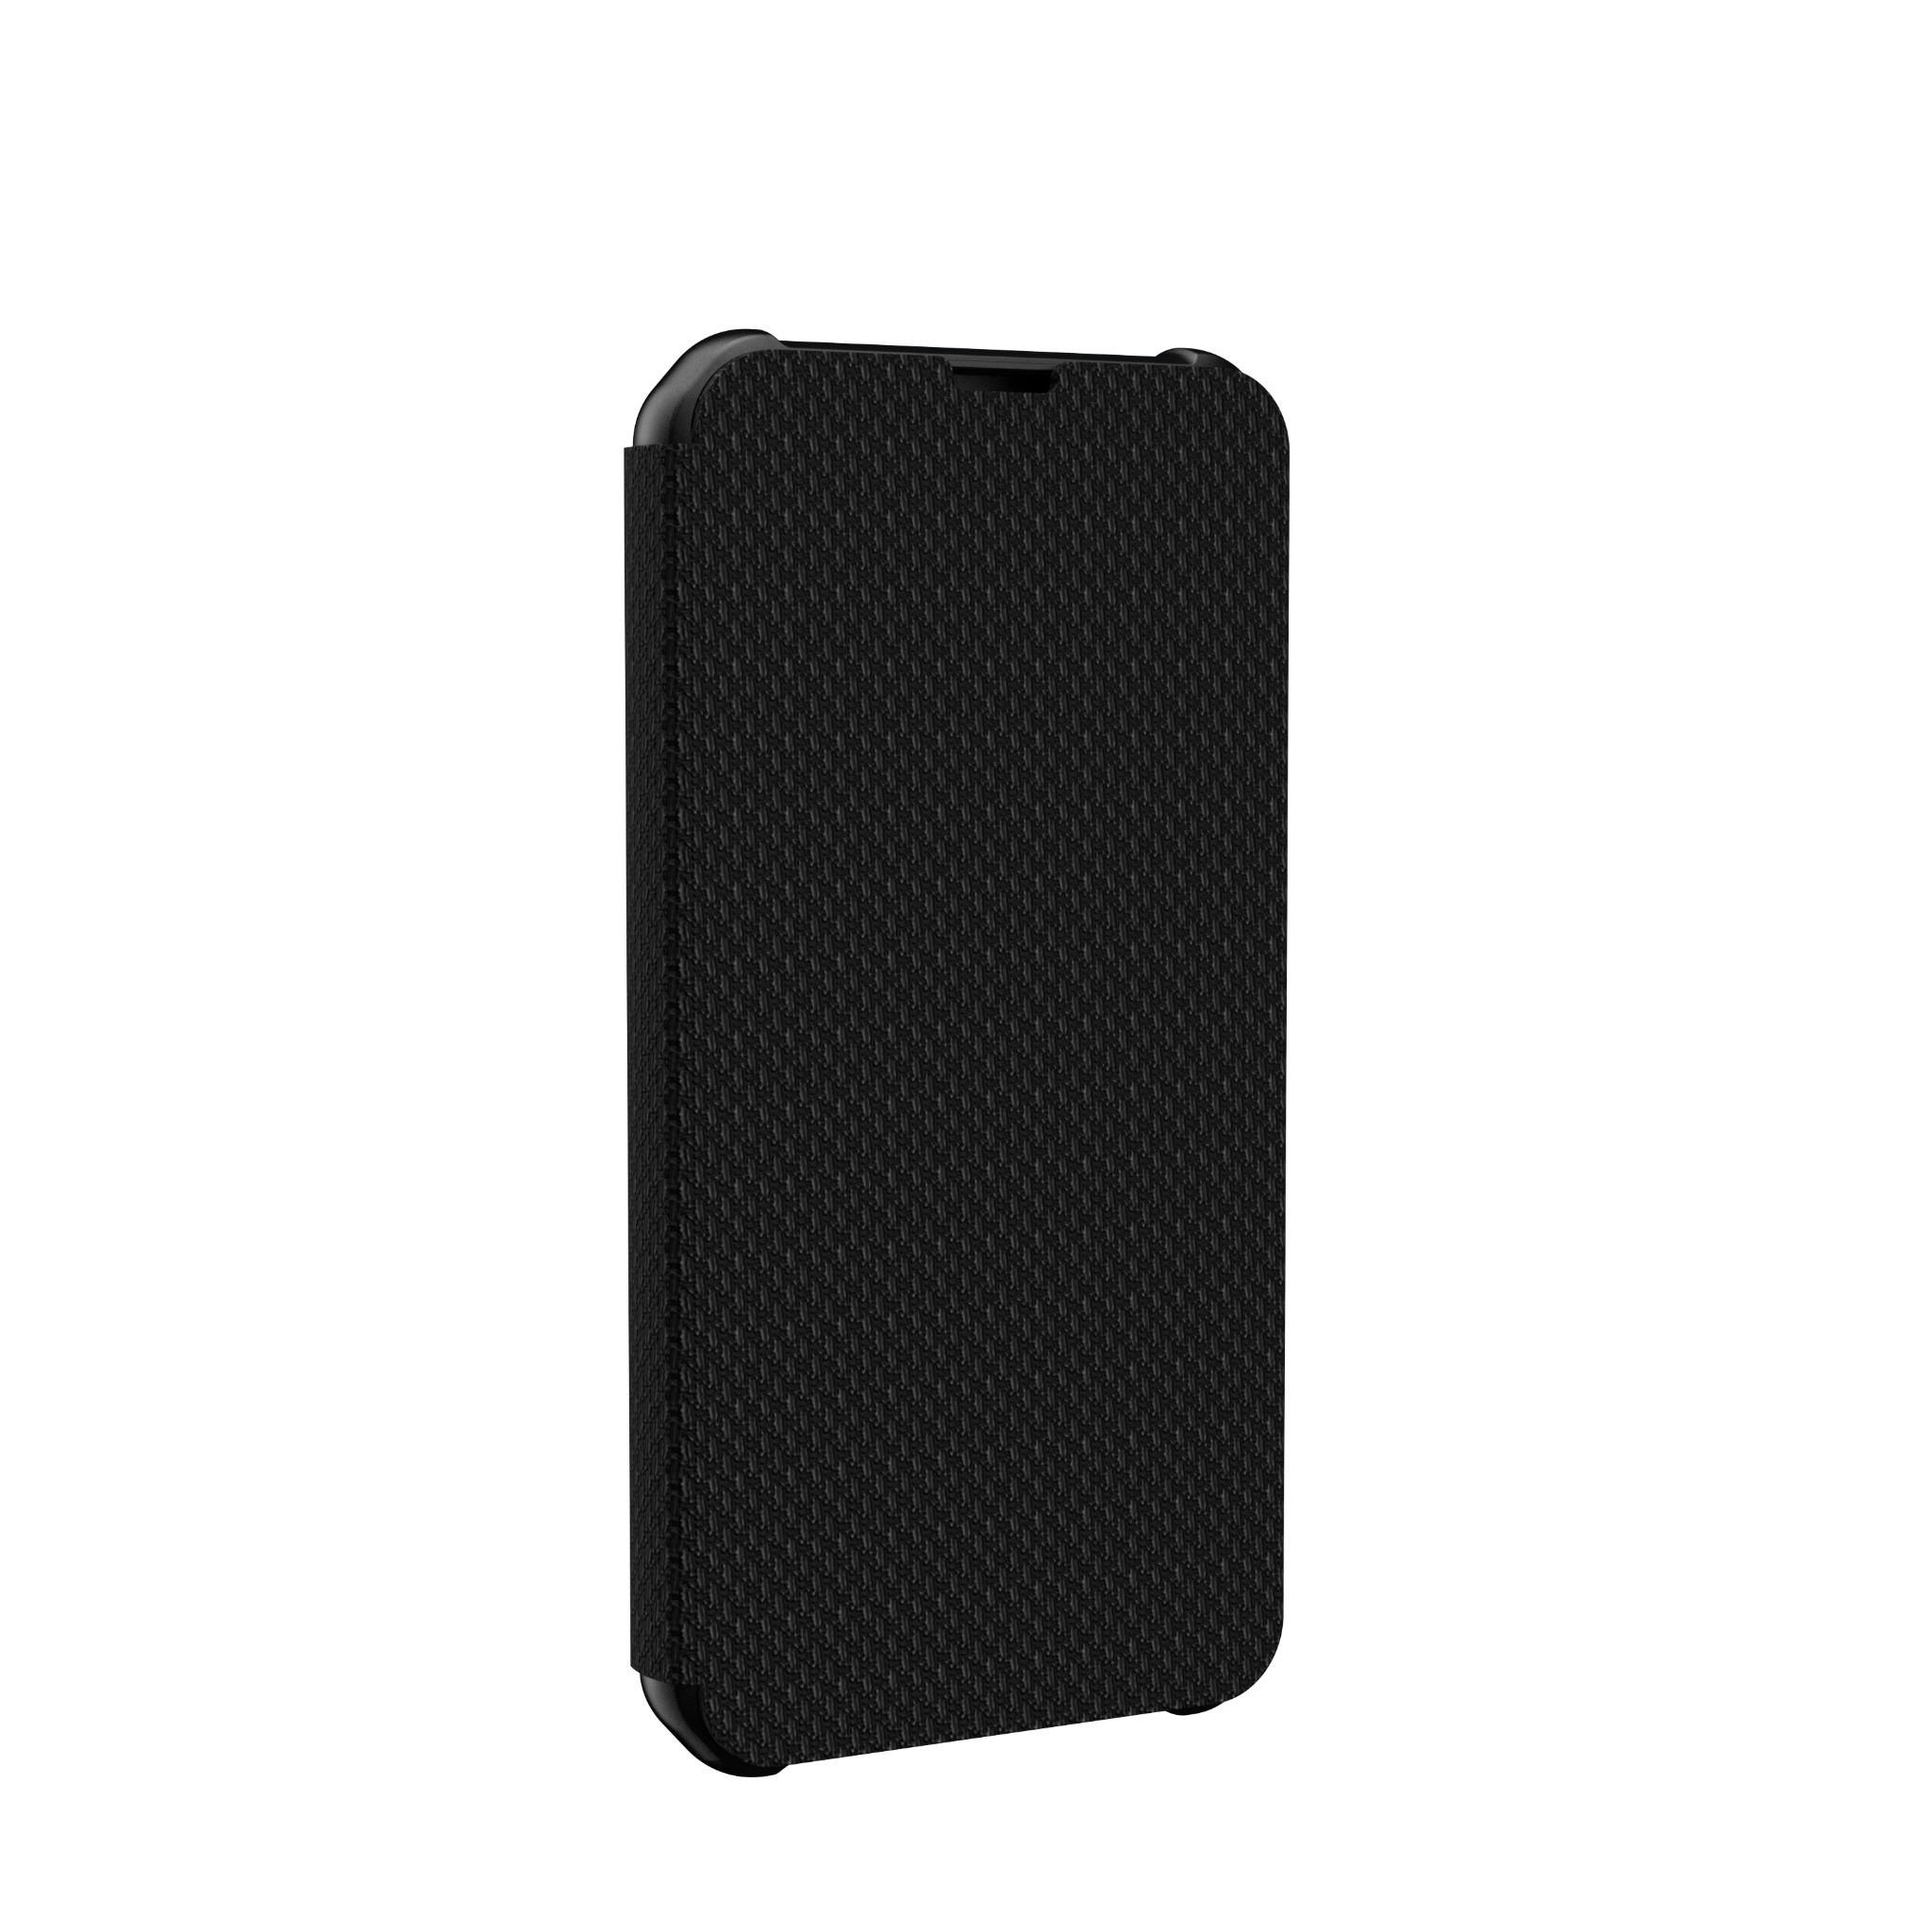  Ốp lưng Metropolis cho iPhone 13 [6.1 inch] 